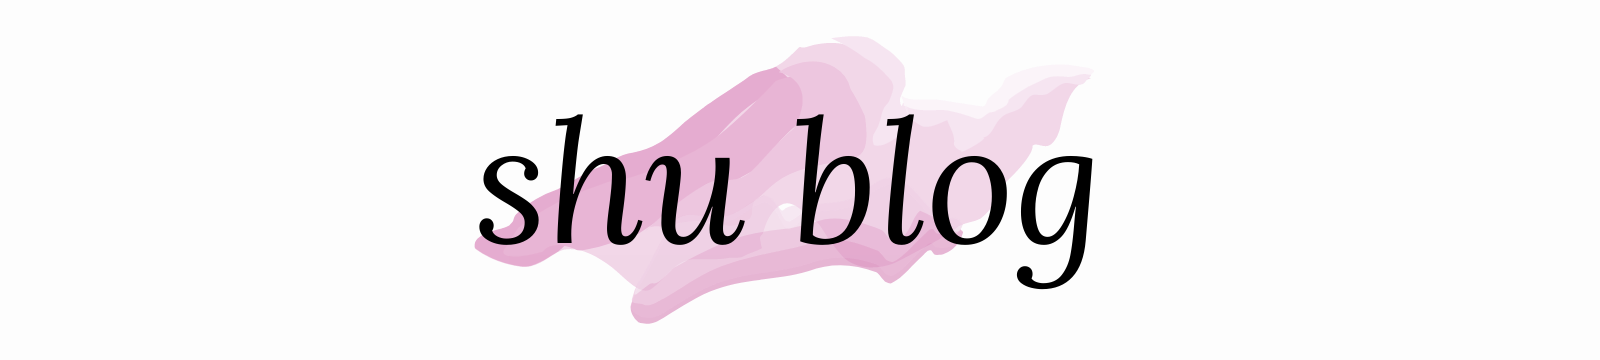 shu blog「将来の不安」を「個人の（書く）力」で解決する人生ブログ。